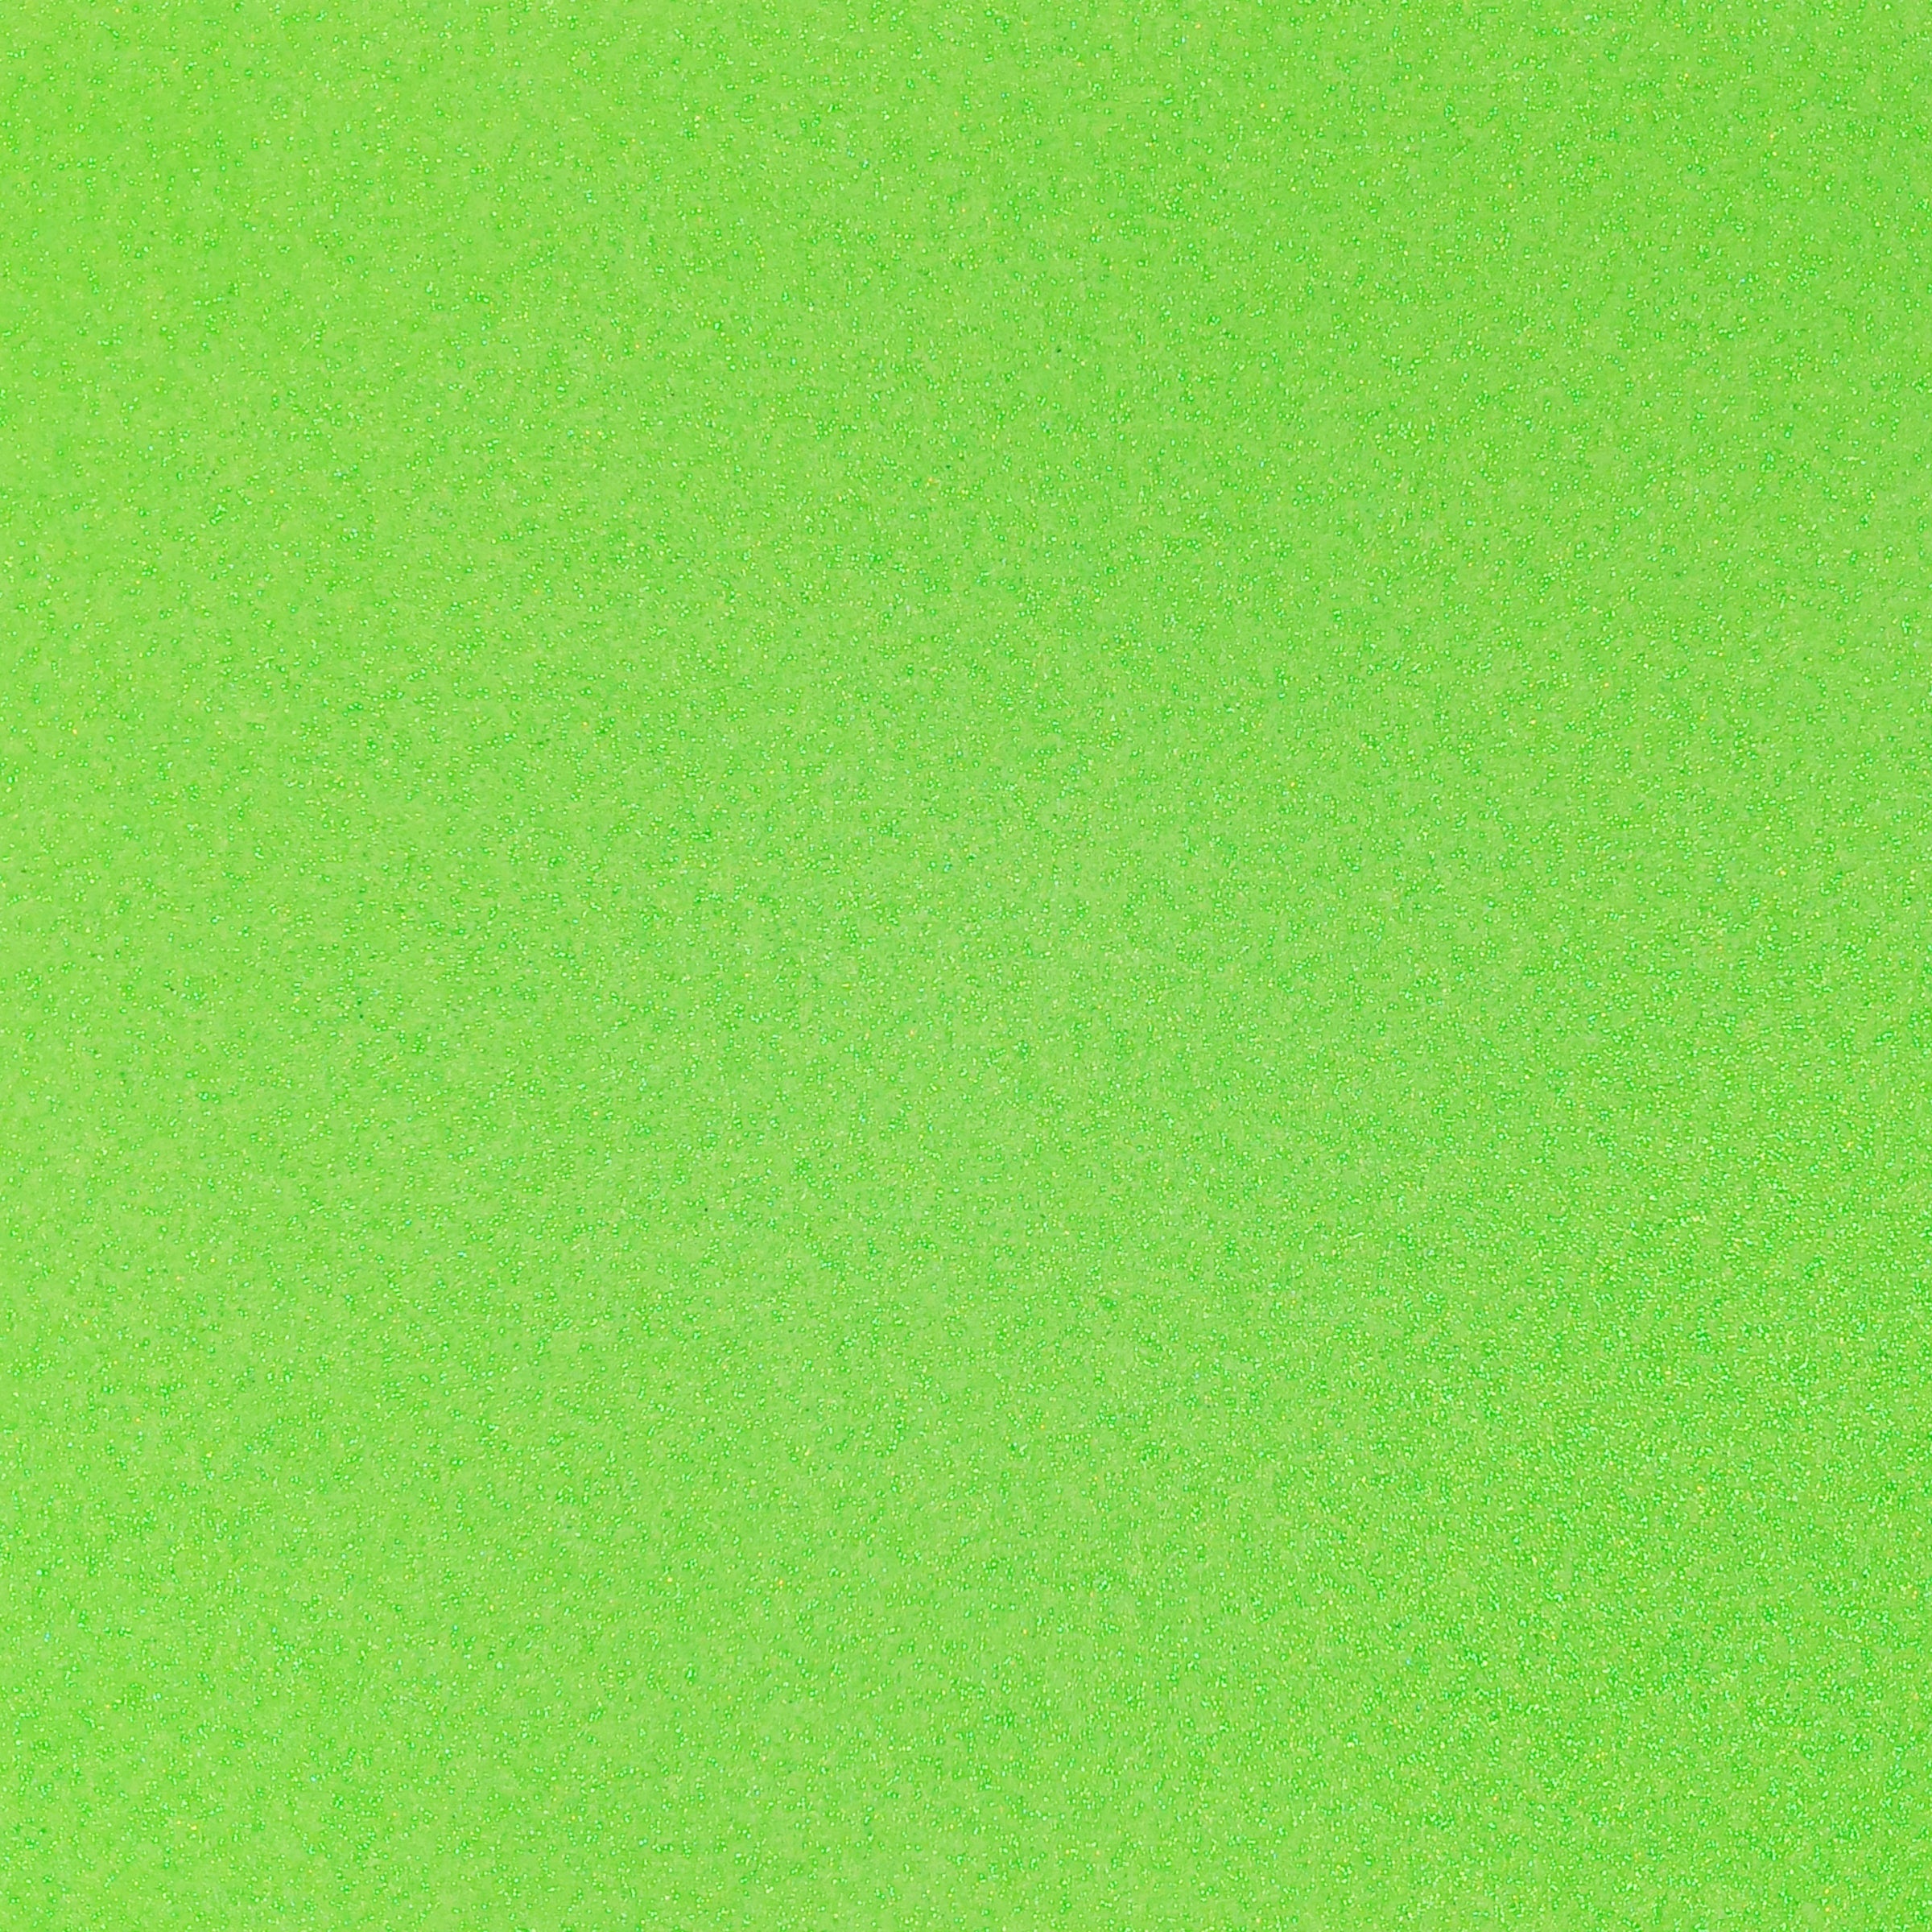 12x12 Neon Lemon Green Glitter Cardstock, 300gsm Cardstock Paper, Premium  Glitter Cardstock Paper, Paper for Crafts, Neon Lemon Greenpaper 